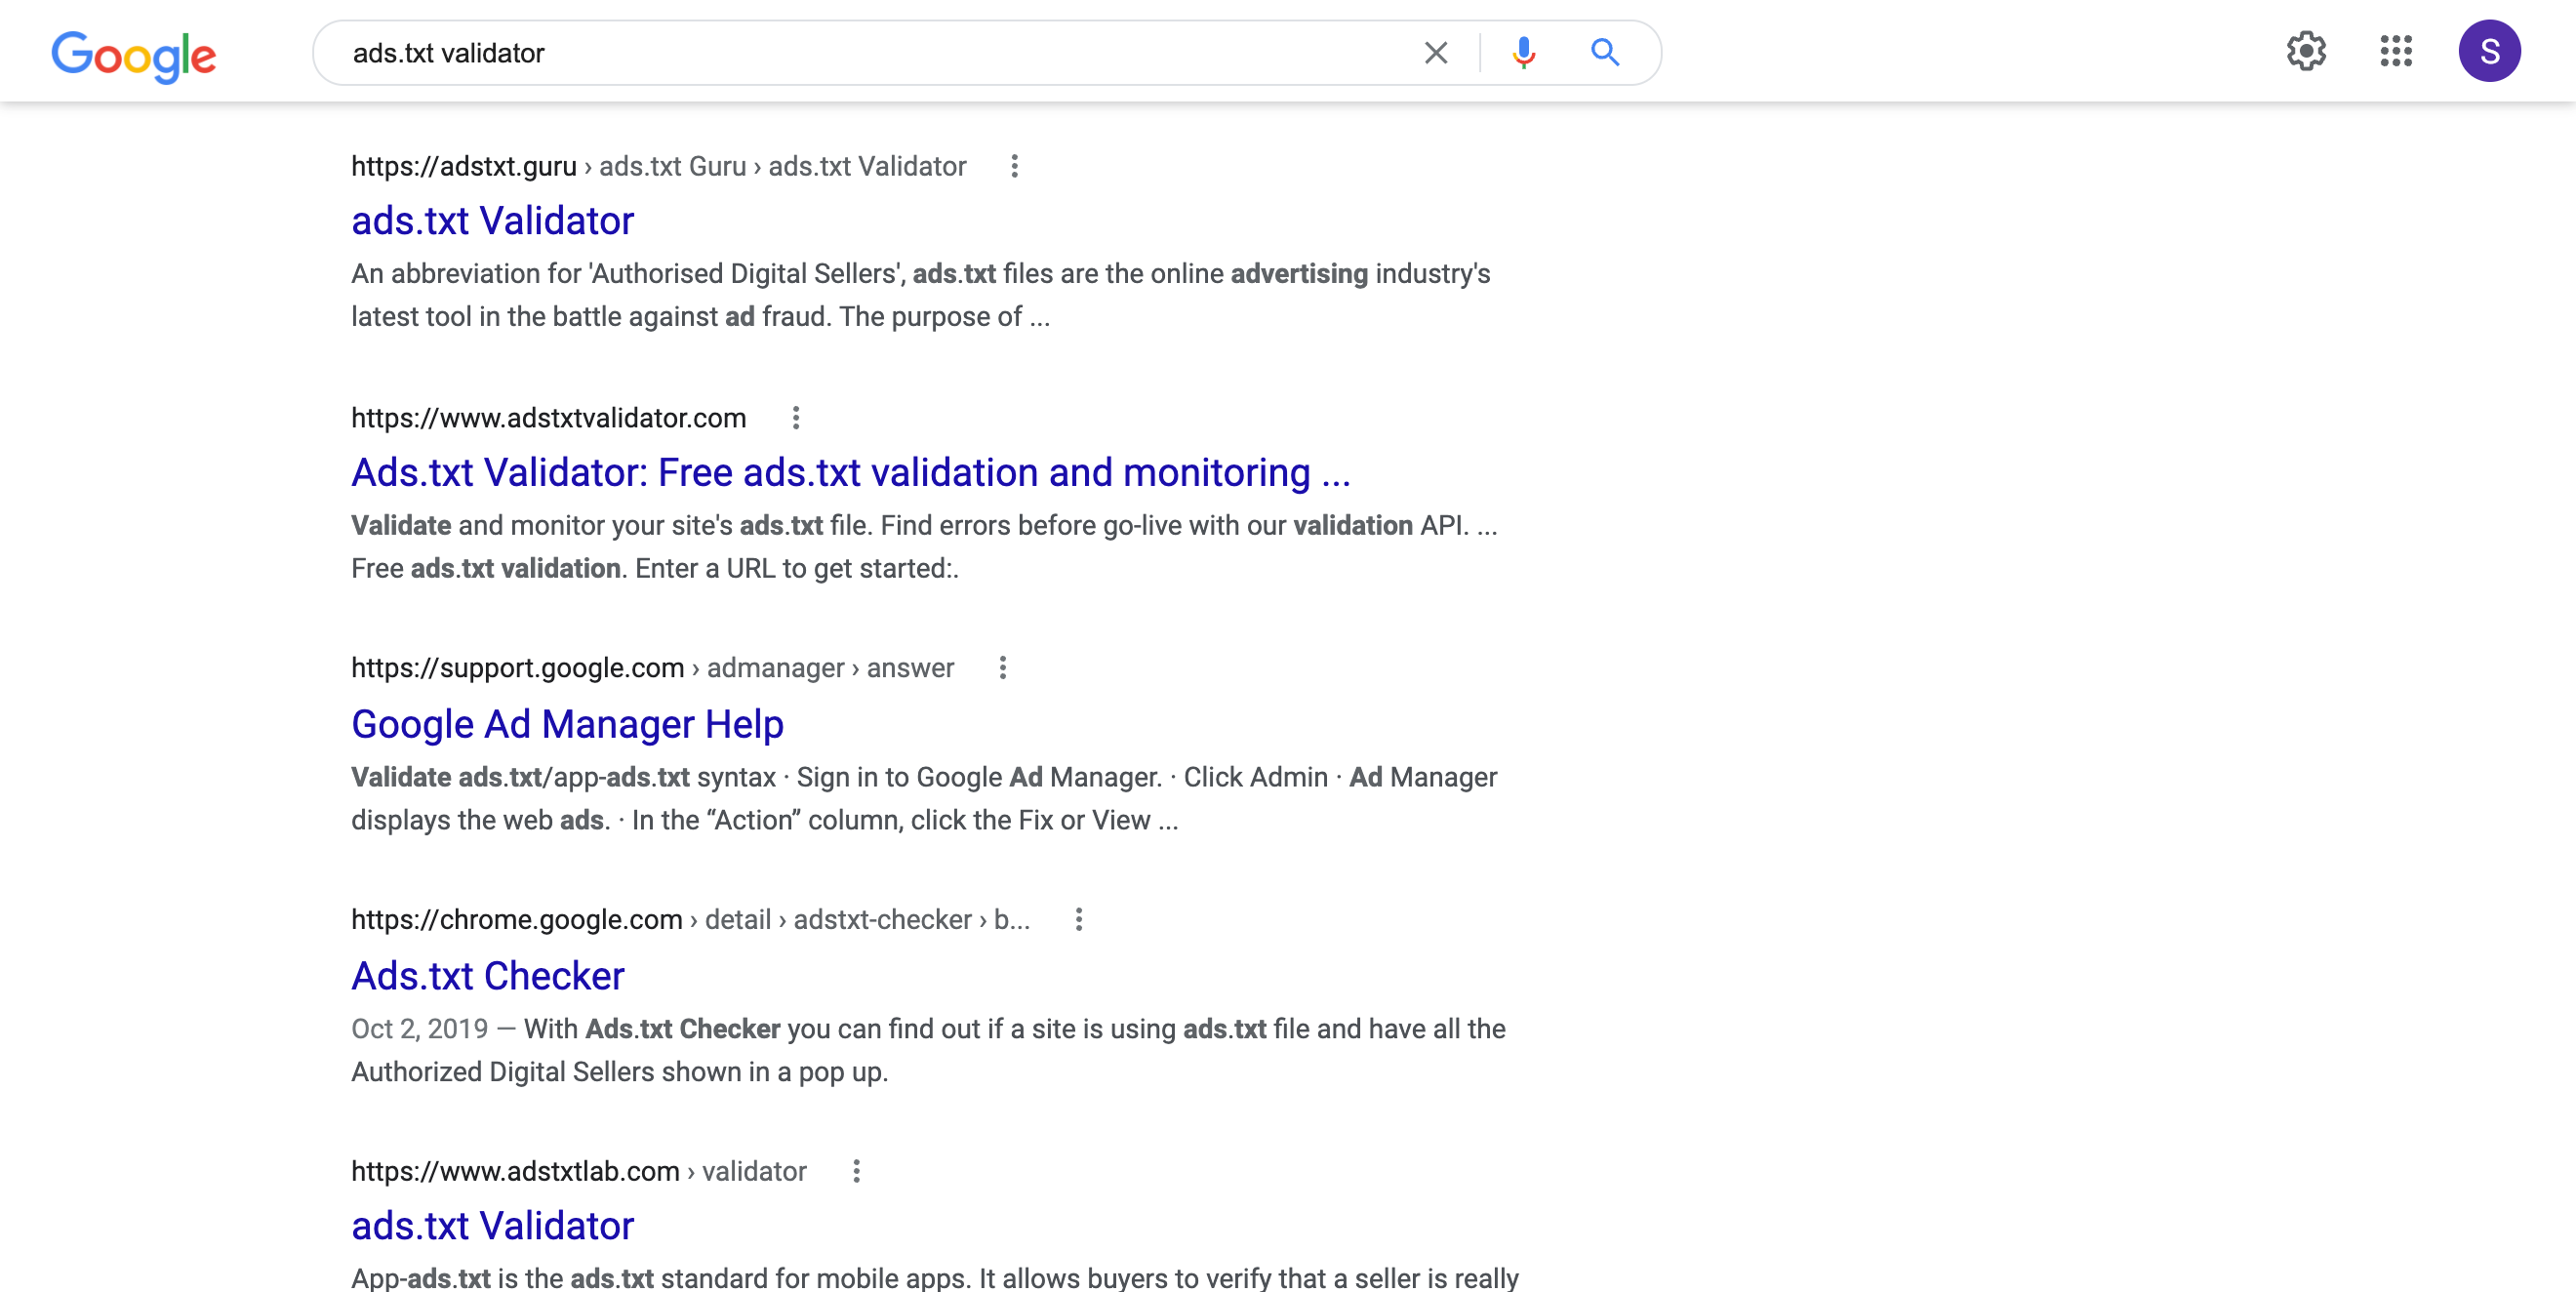 ads.txt validator - Google Search